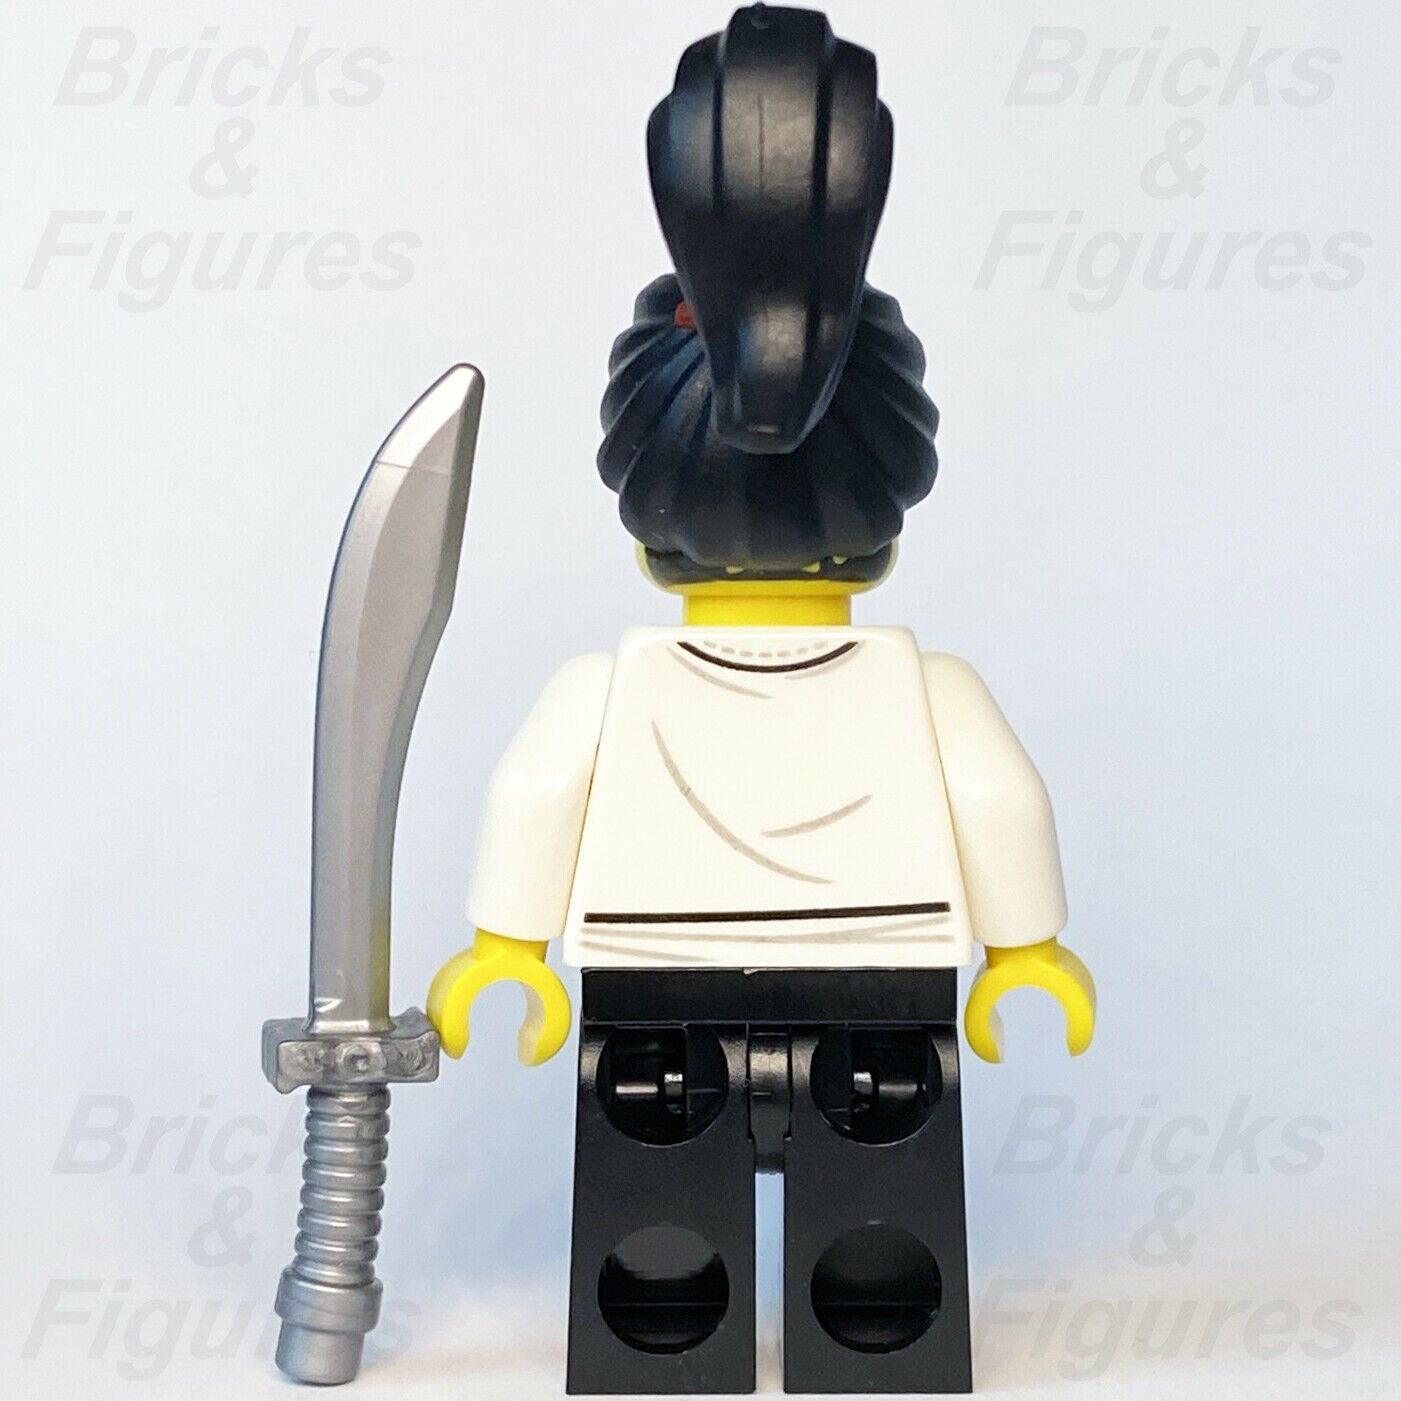 New Ninjago LEGO Okino Samurai Ninja Prime Empire Minifigure 71708 - Bricks & Figures